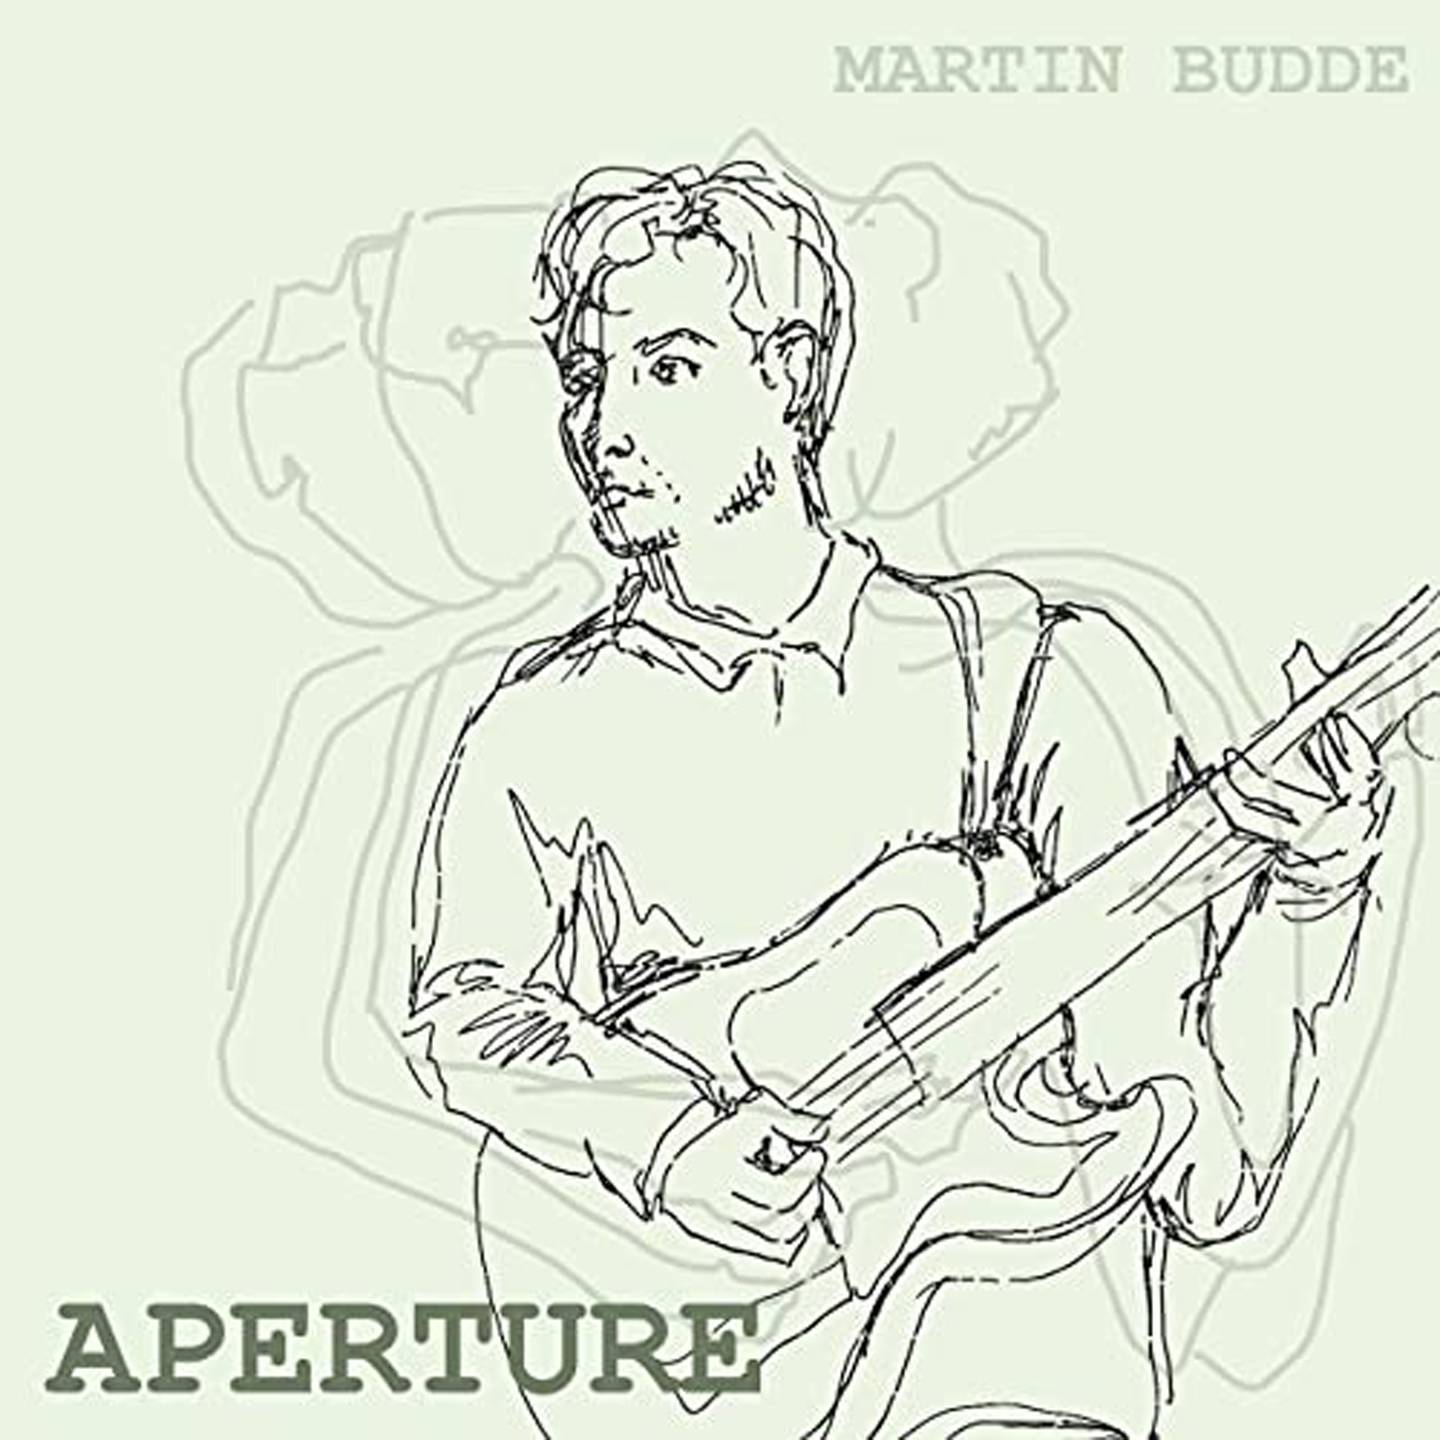 "Aperture" Martin Budde